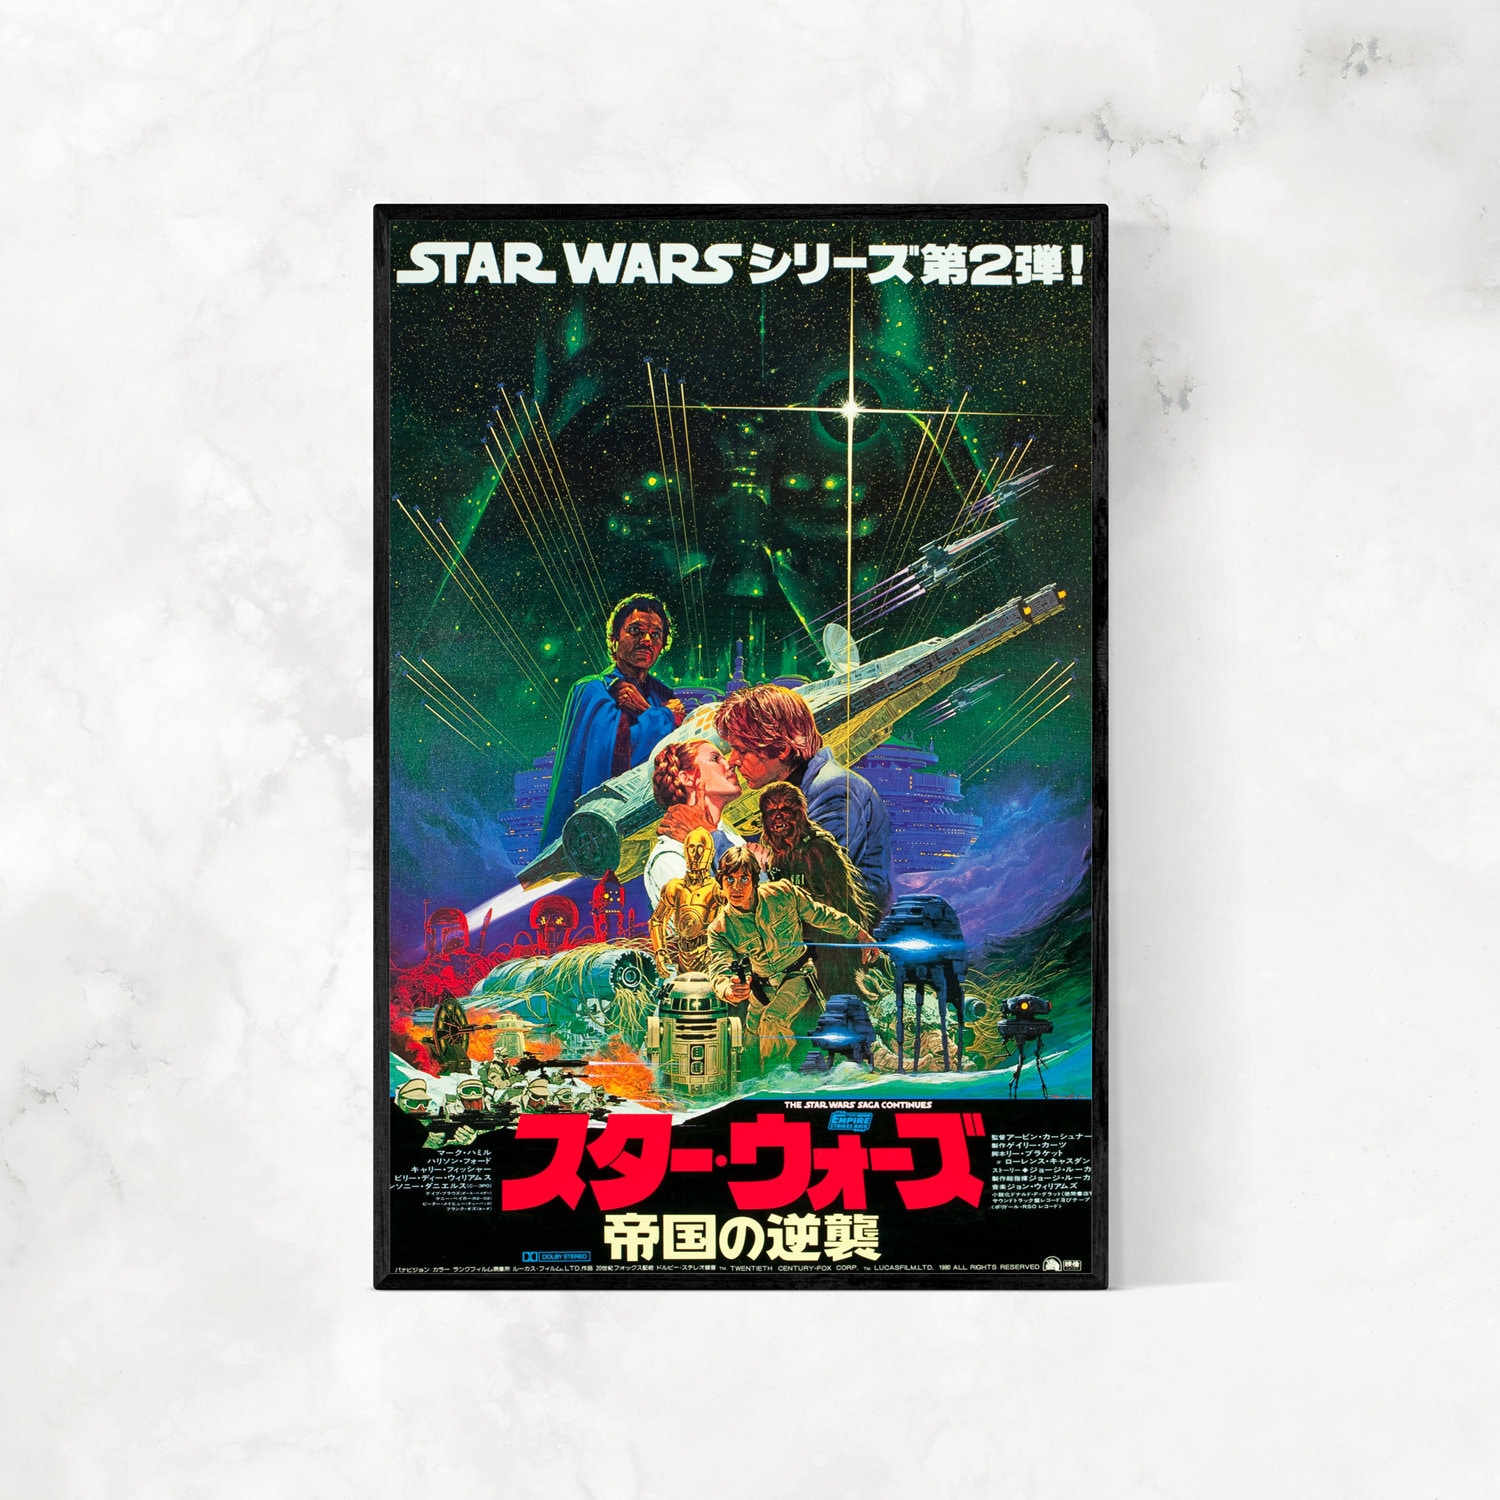 Star Wars Episode V - The Empire Strikes Back (1980) Japanese Movie Poster